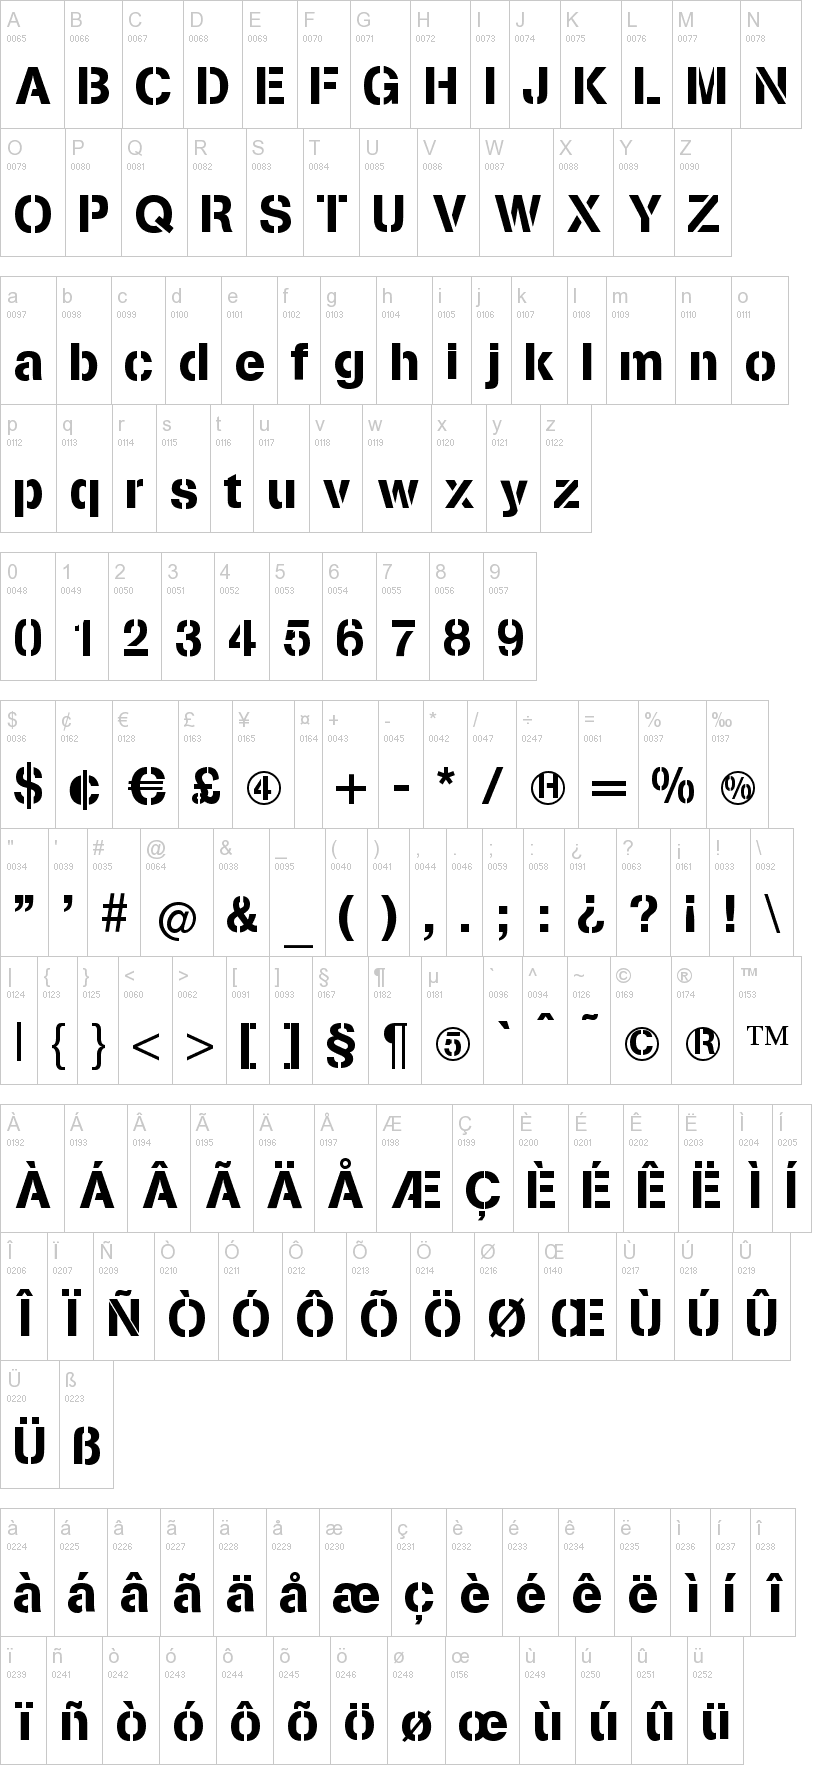 Stencil Font Free - Dafont Free